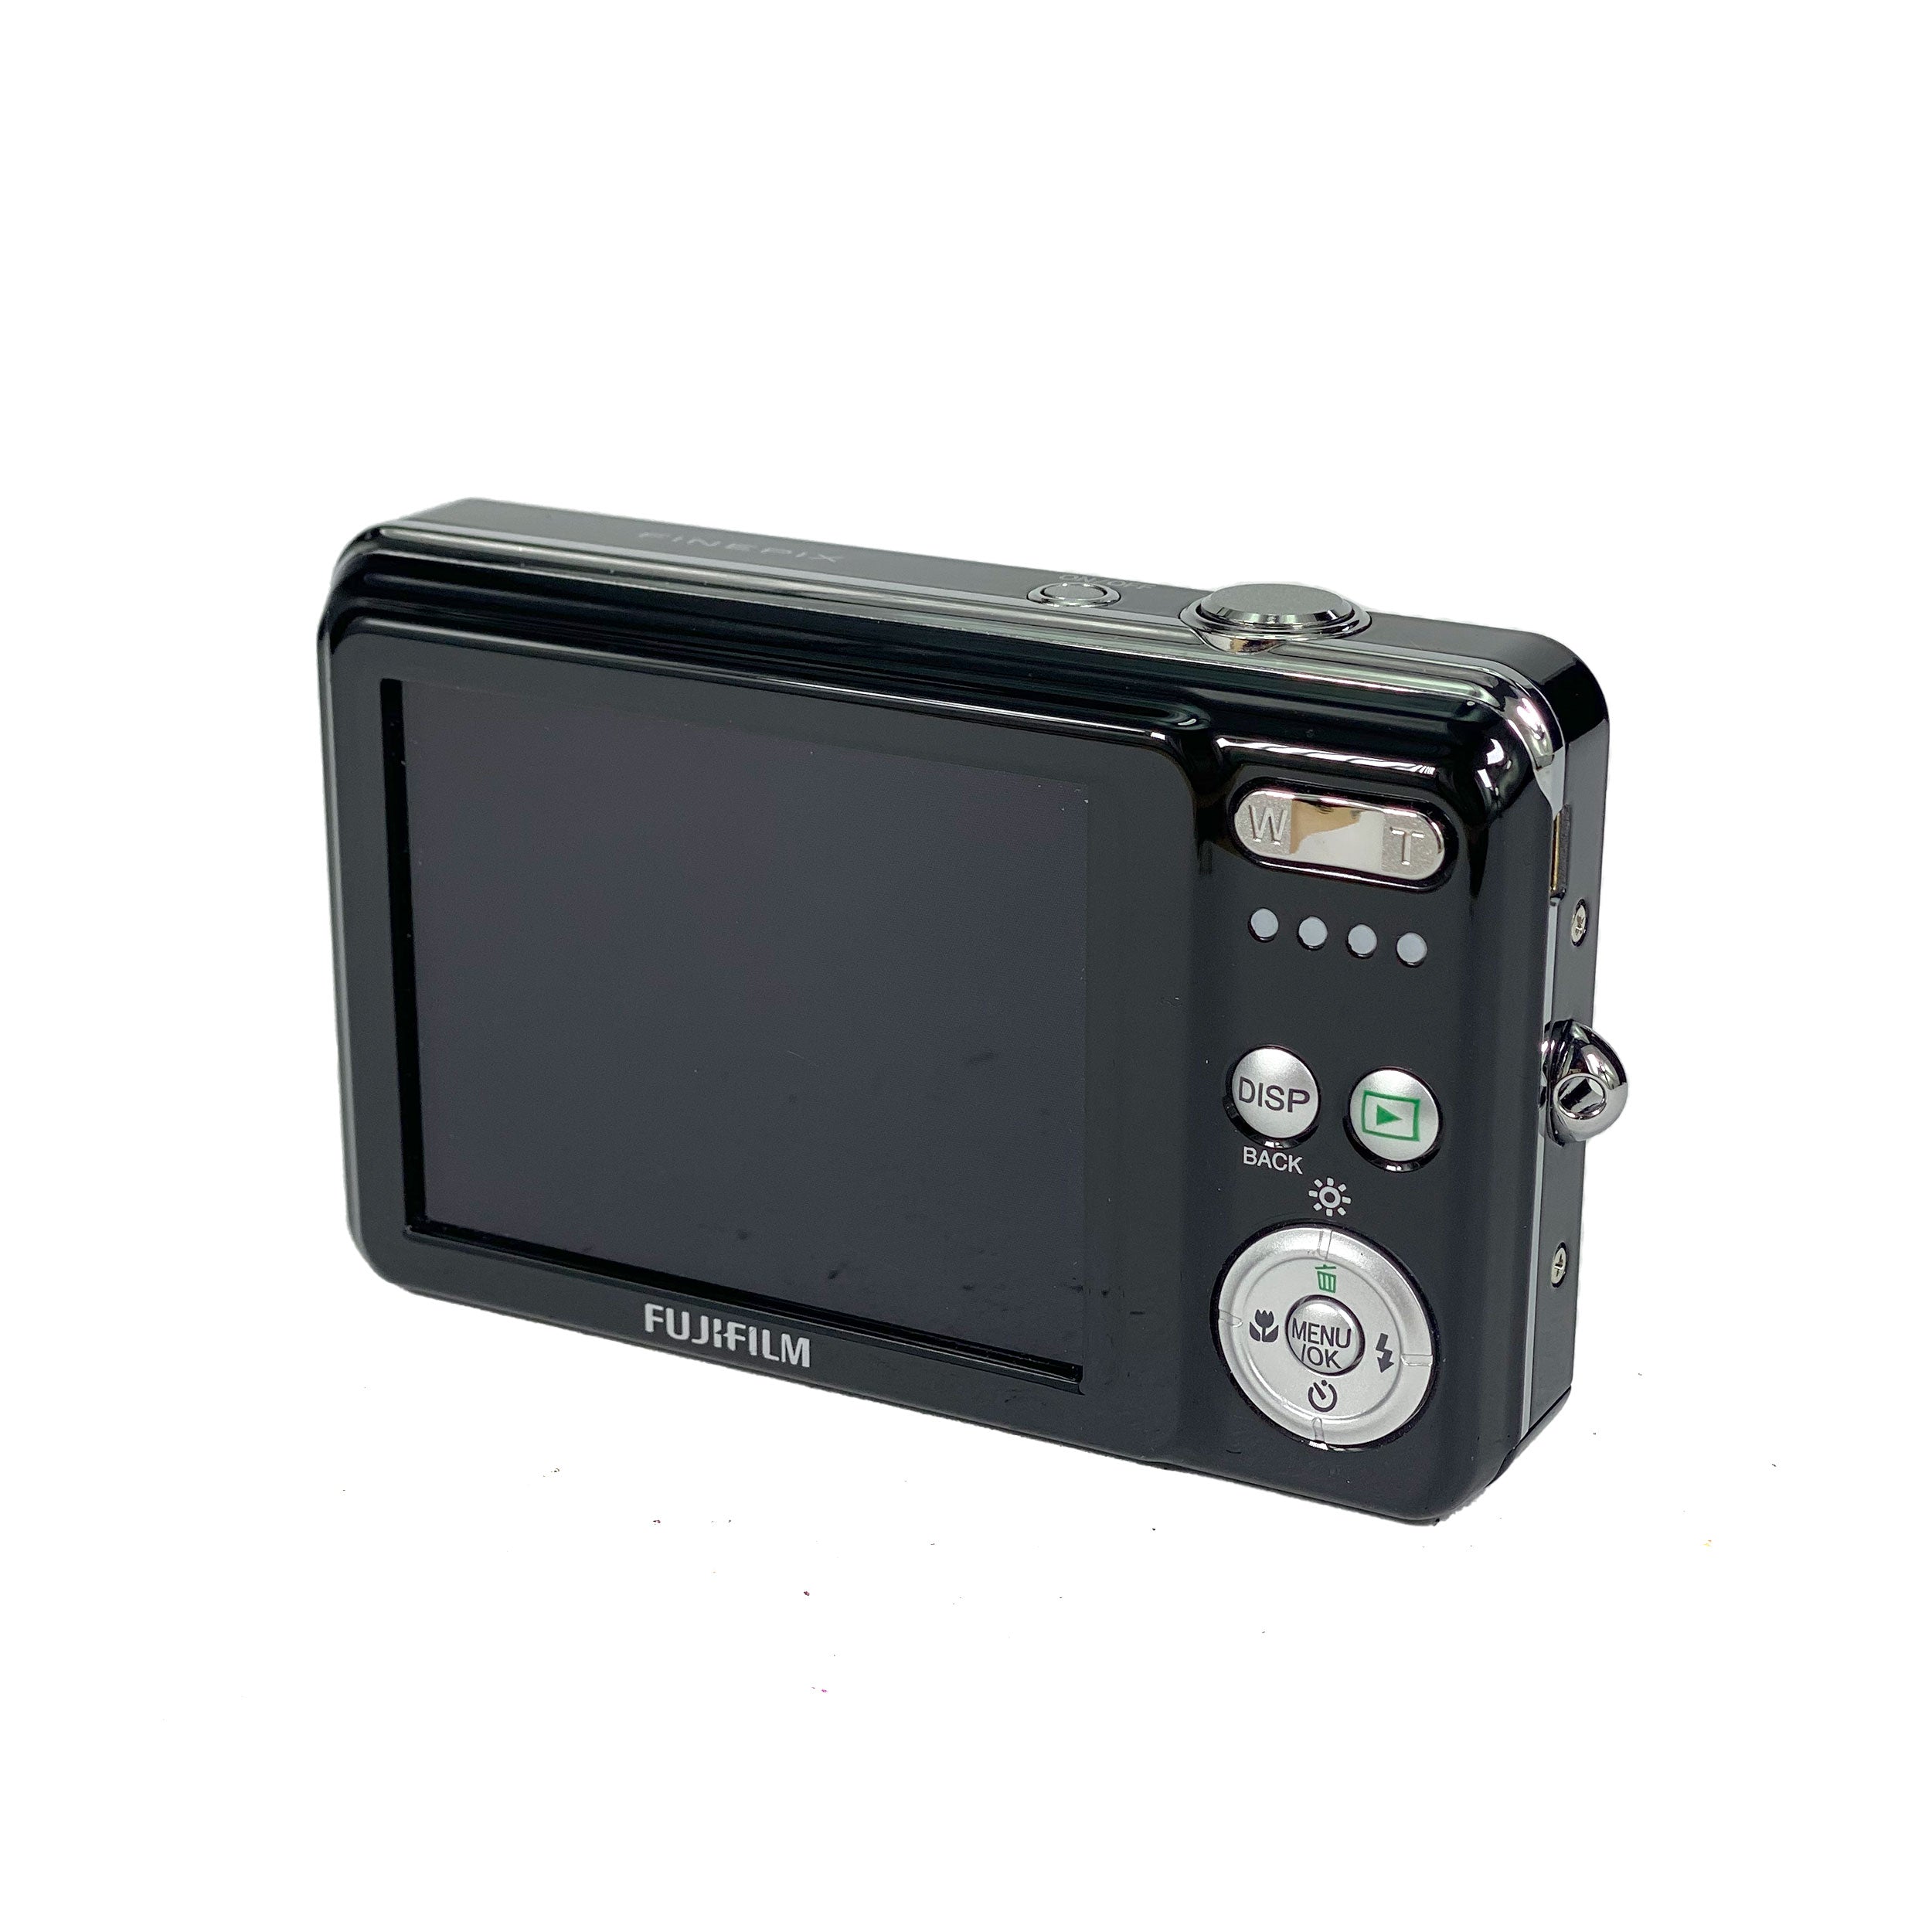 Fujifilm Finepix J30 Digital Compact